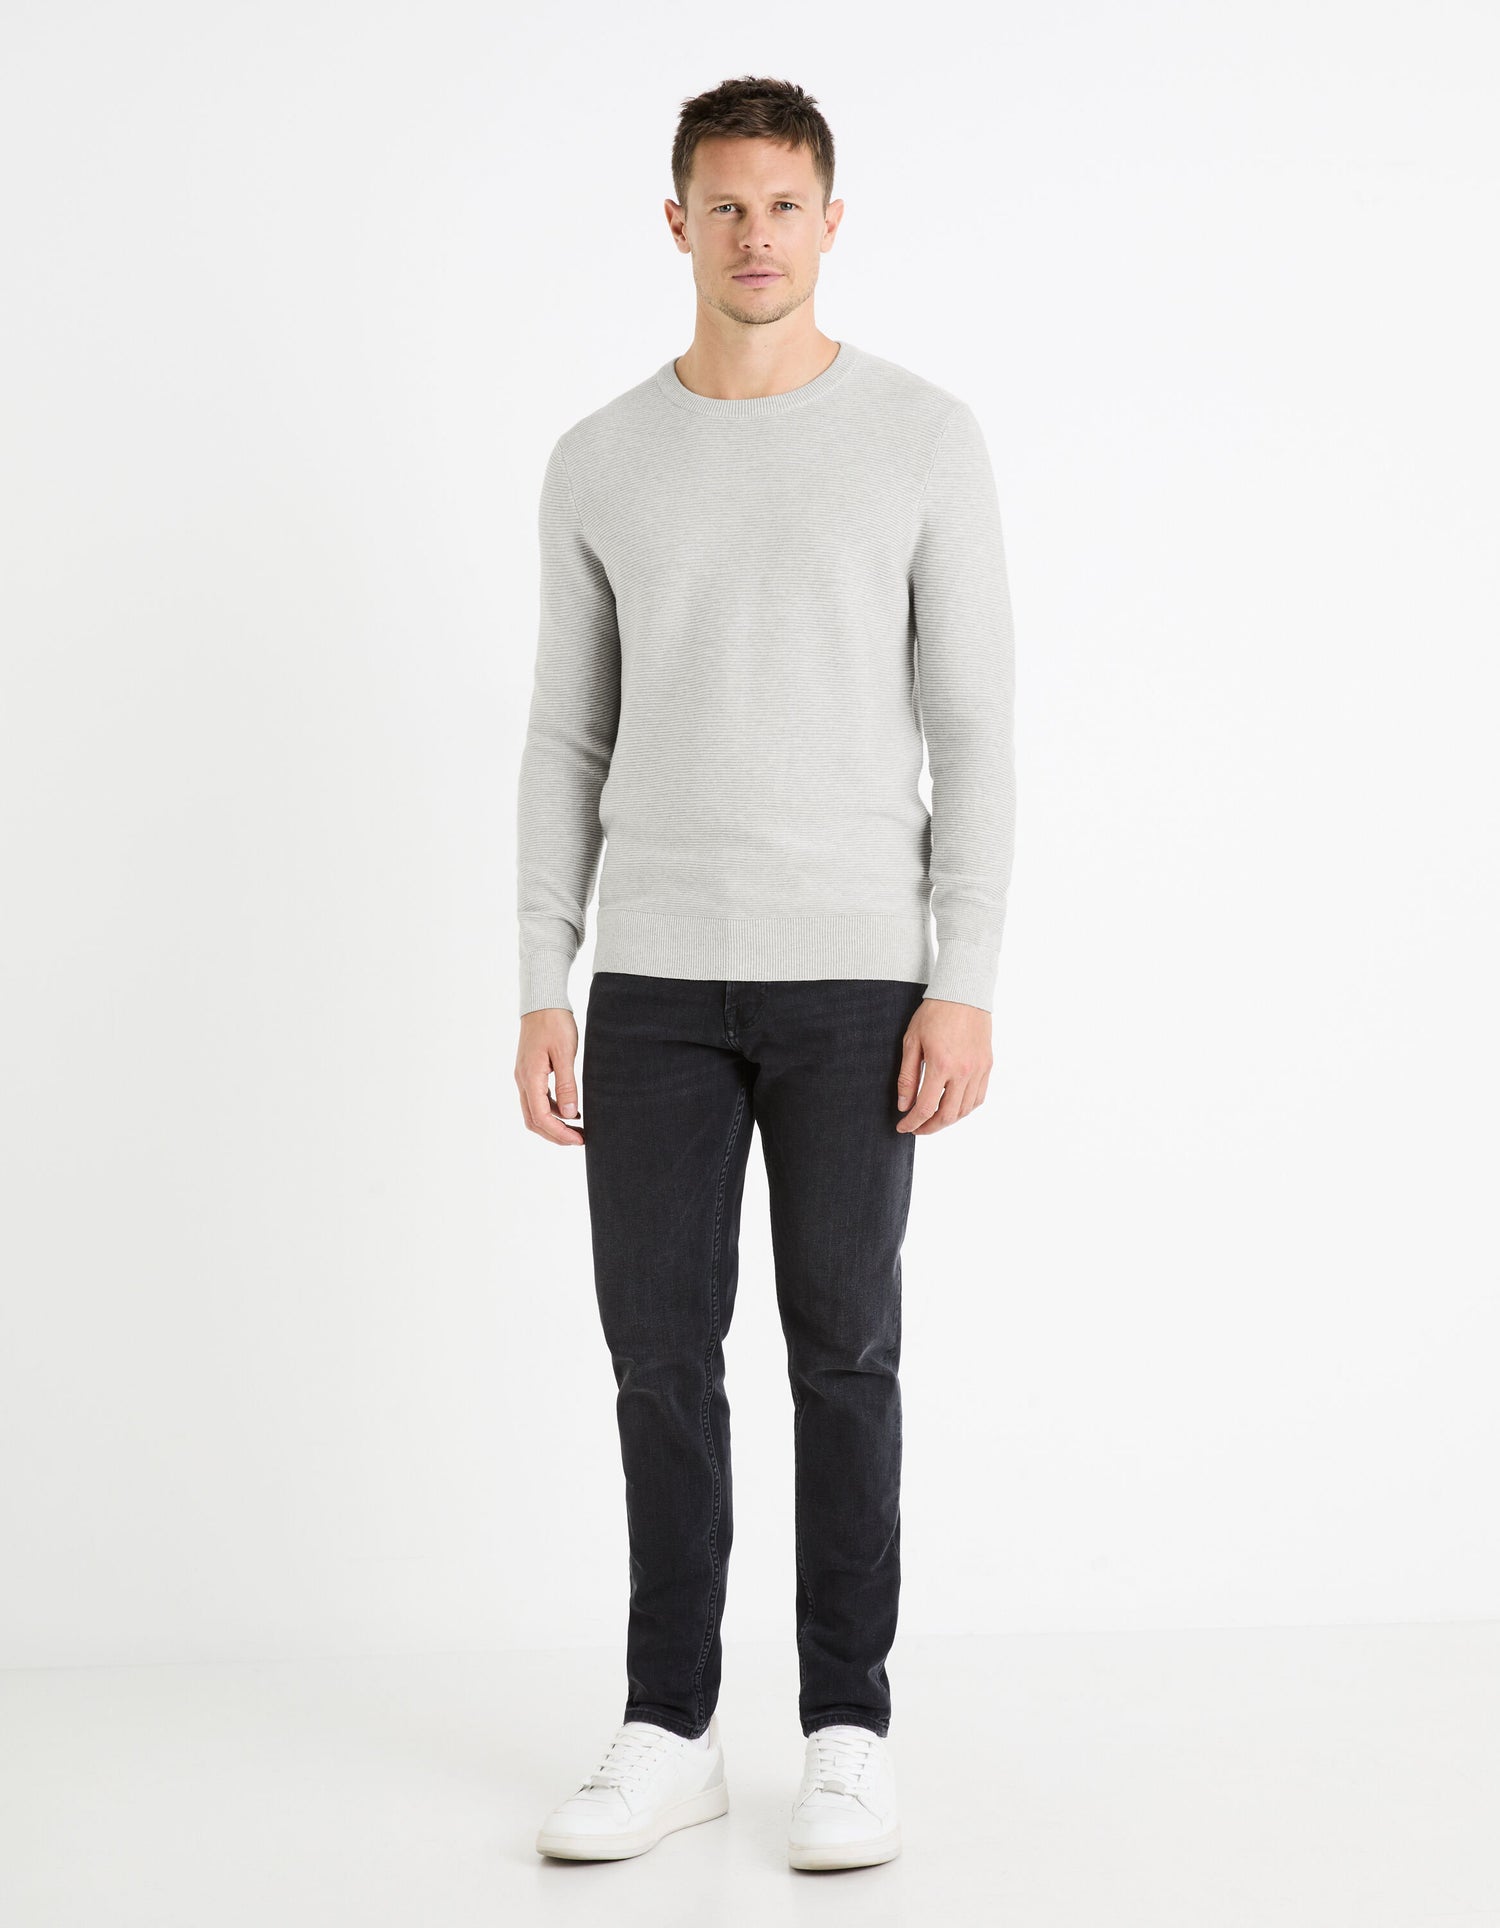 Round Neck Sweater 100% Cotton_FEOTTONI_GREY MEL_03